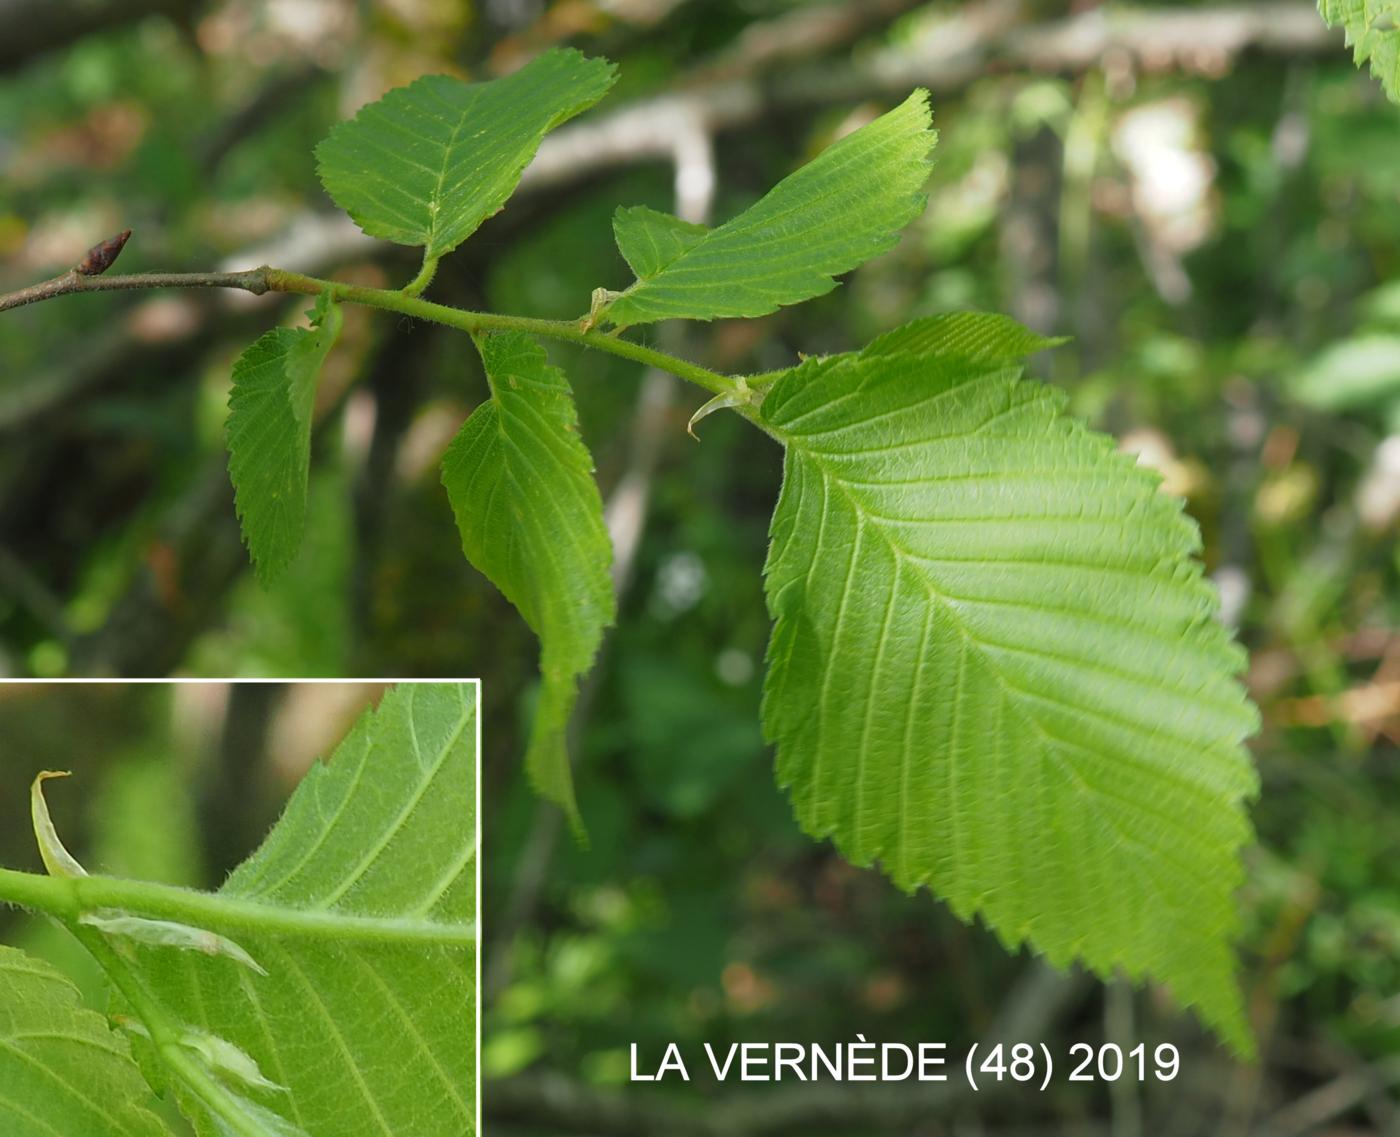 White-Elm, European leaf